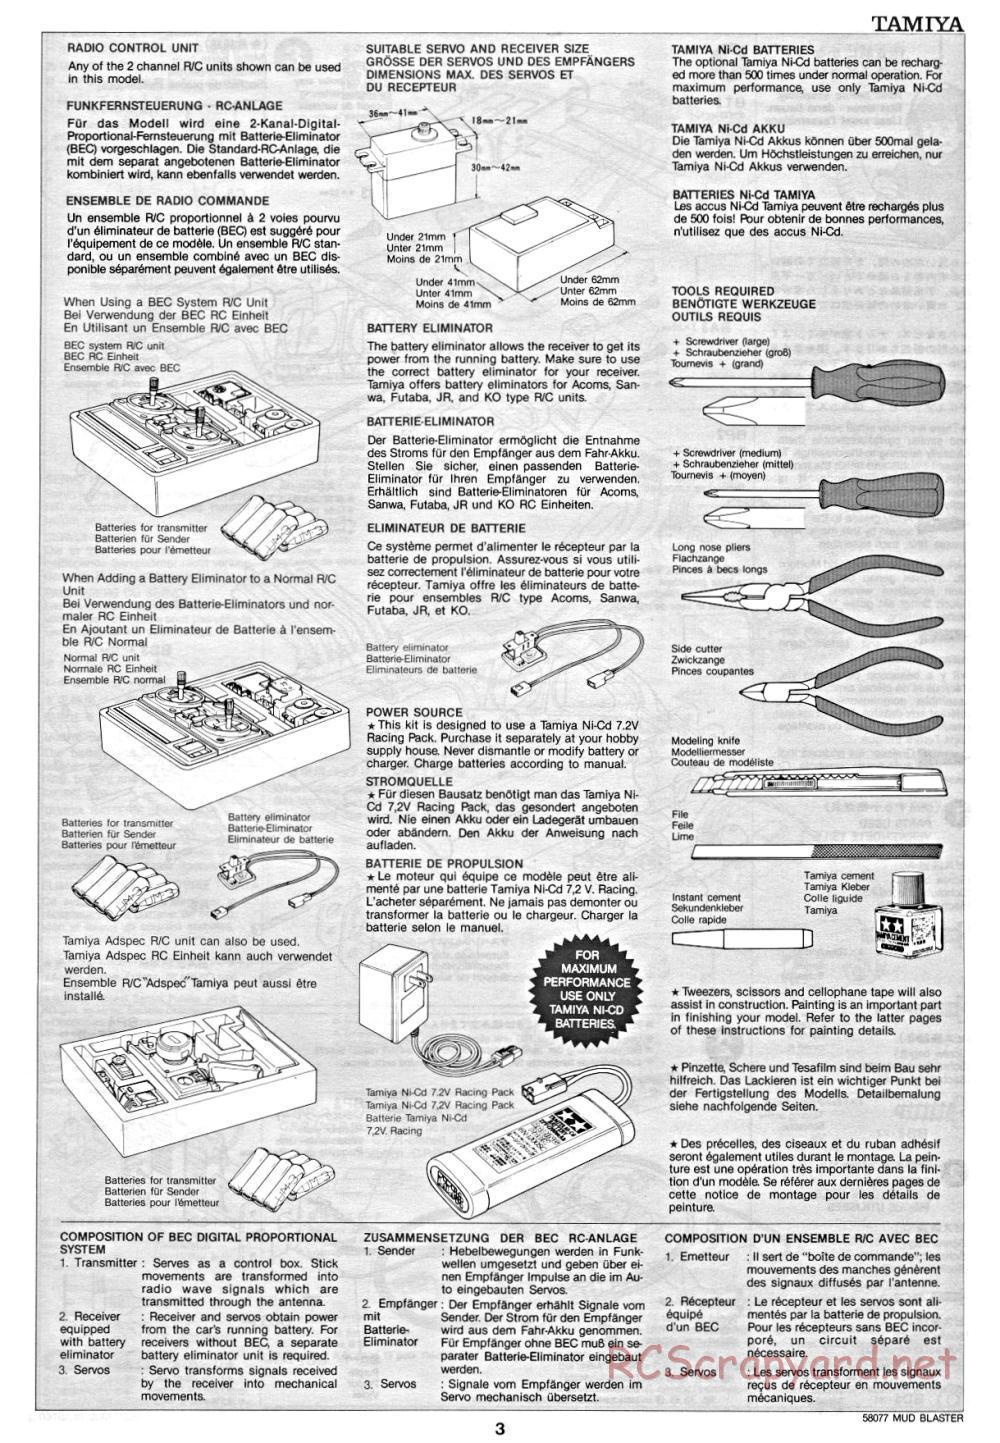 Tamiya - Mud Blaster - 58077 - Manual - Page 3